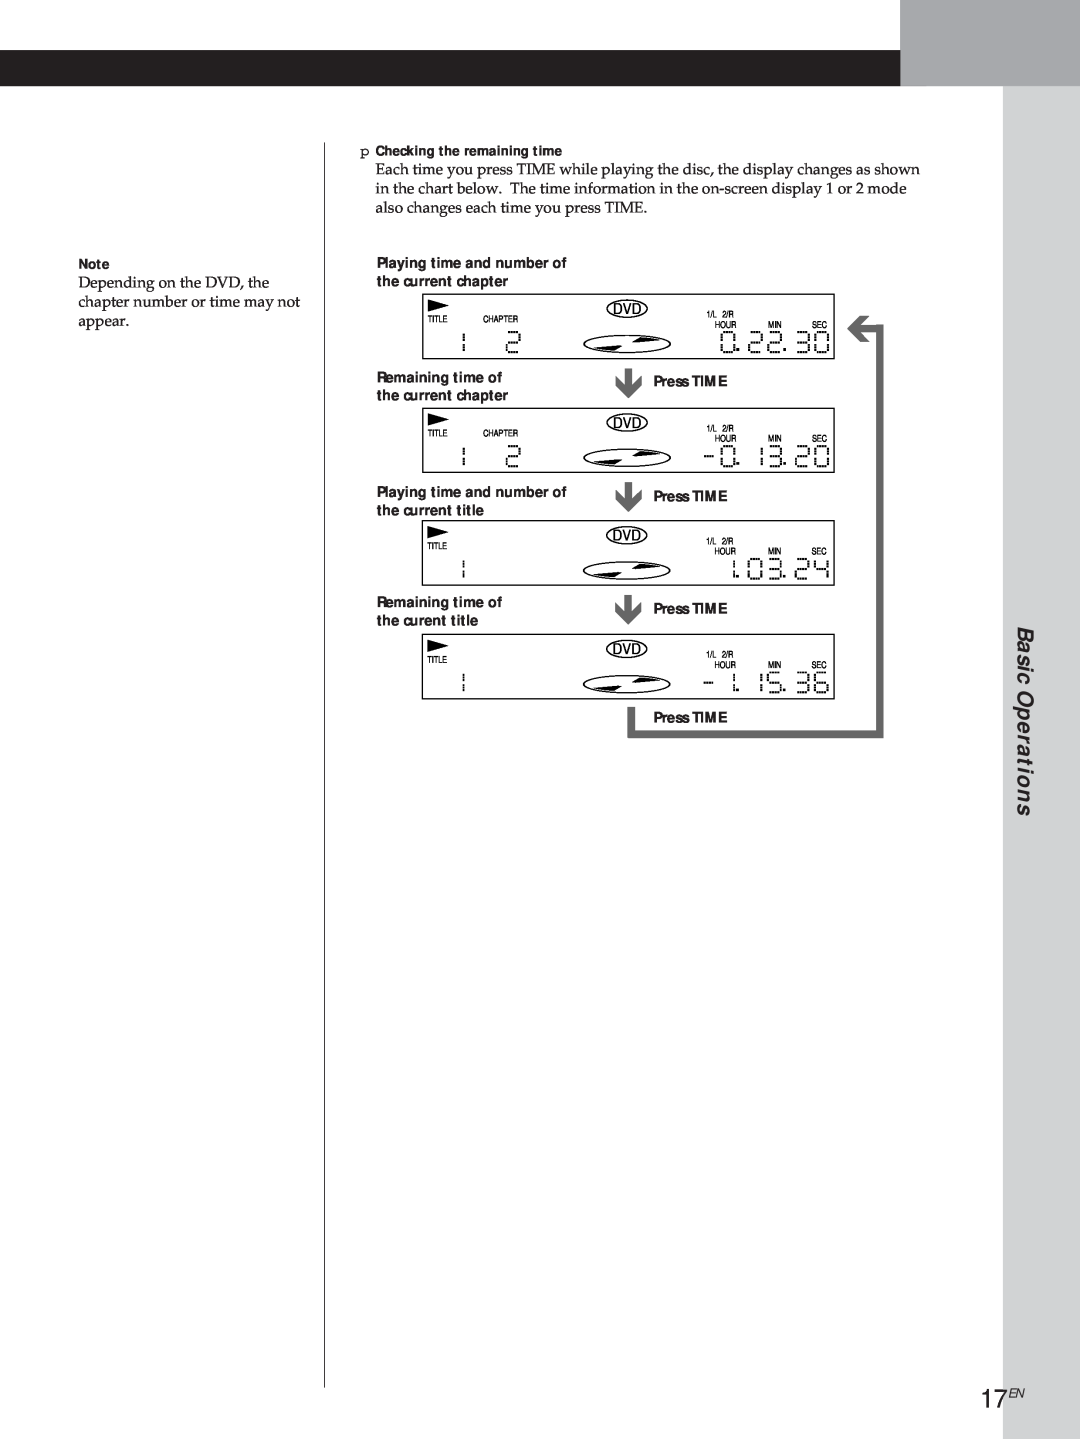 Sony DVP3980 manual 17EN, Basic Operations 